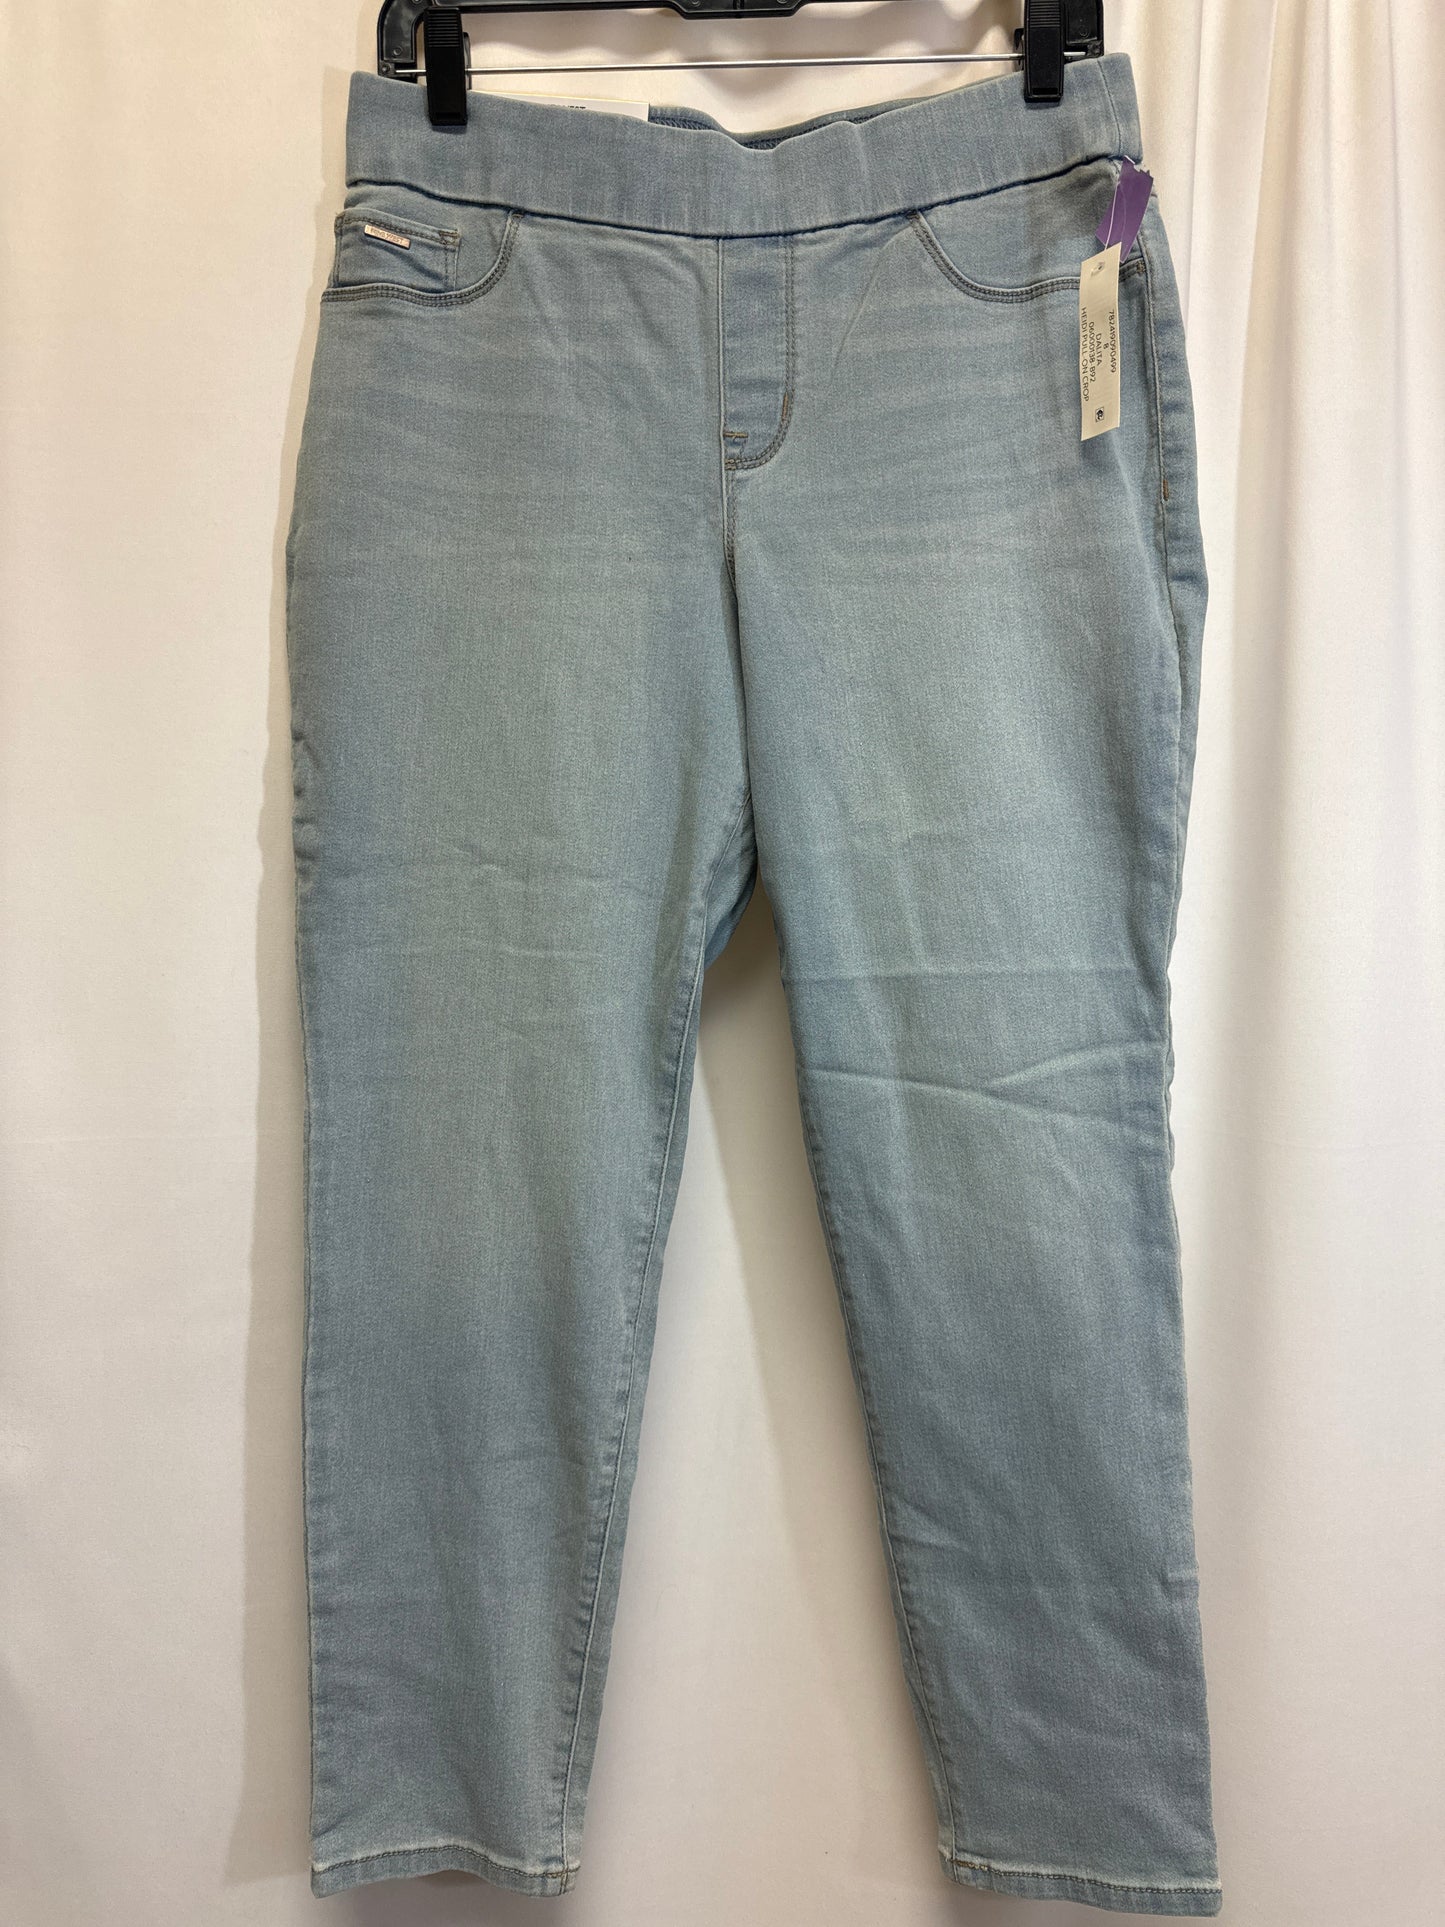 Blue Denim Jeans Cropped Nine West, Size 8